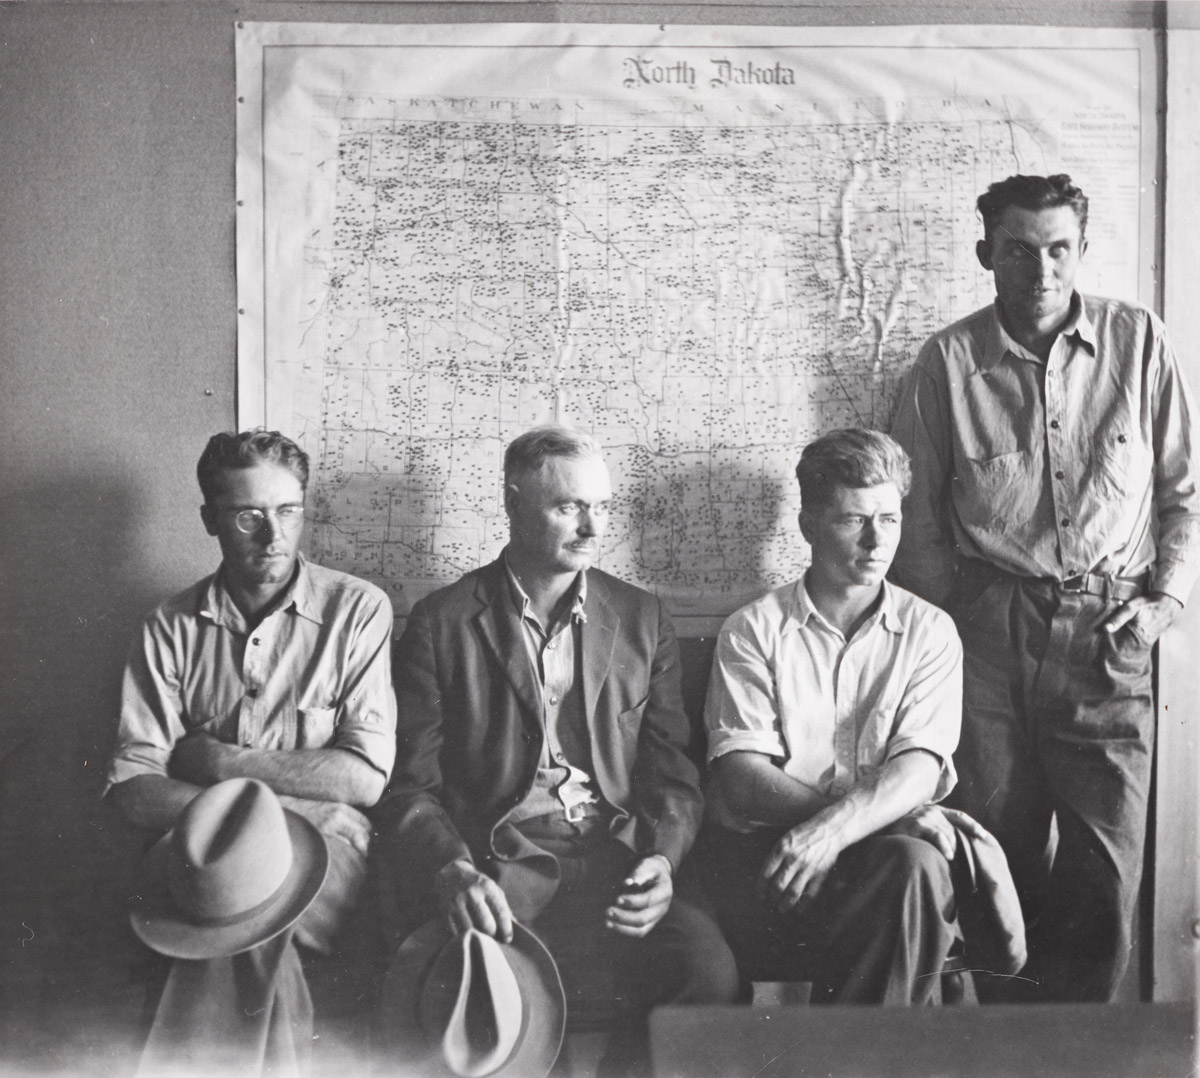 ARTHUR ROTHSTEIN (1915-1985) North Dakota farmers waiting for their grants in Resettlement Administration office, North Dakota * Migran